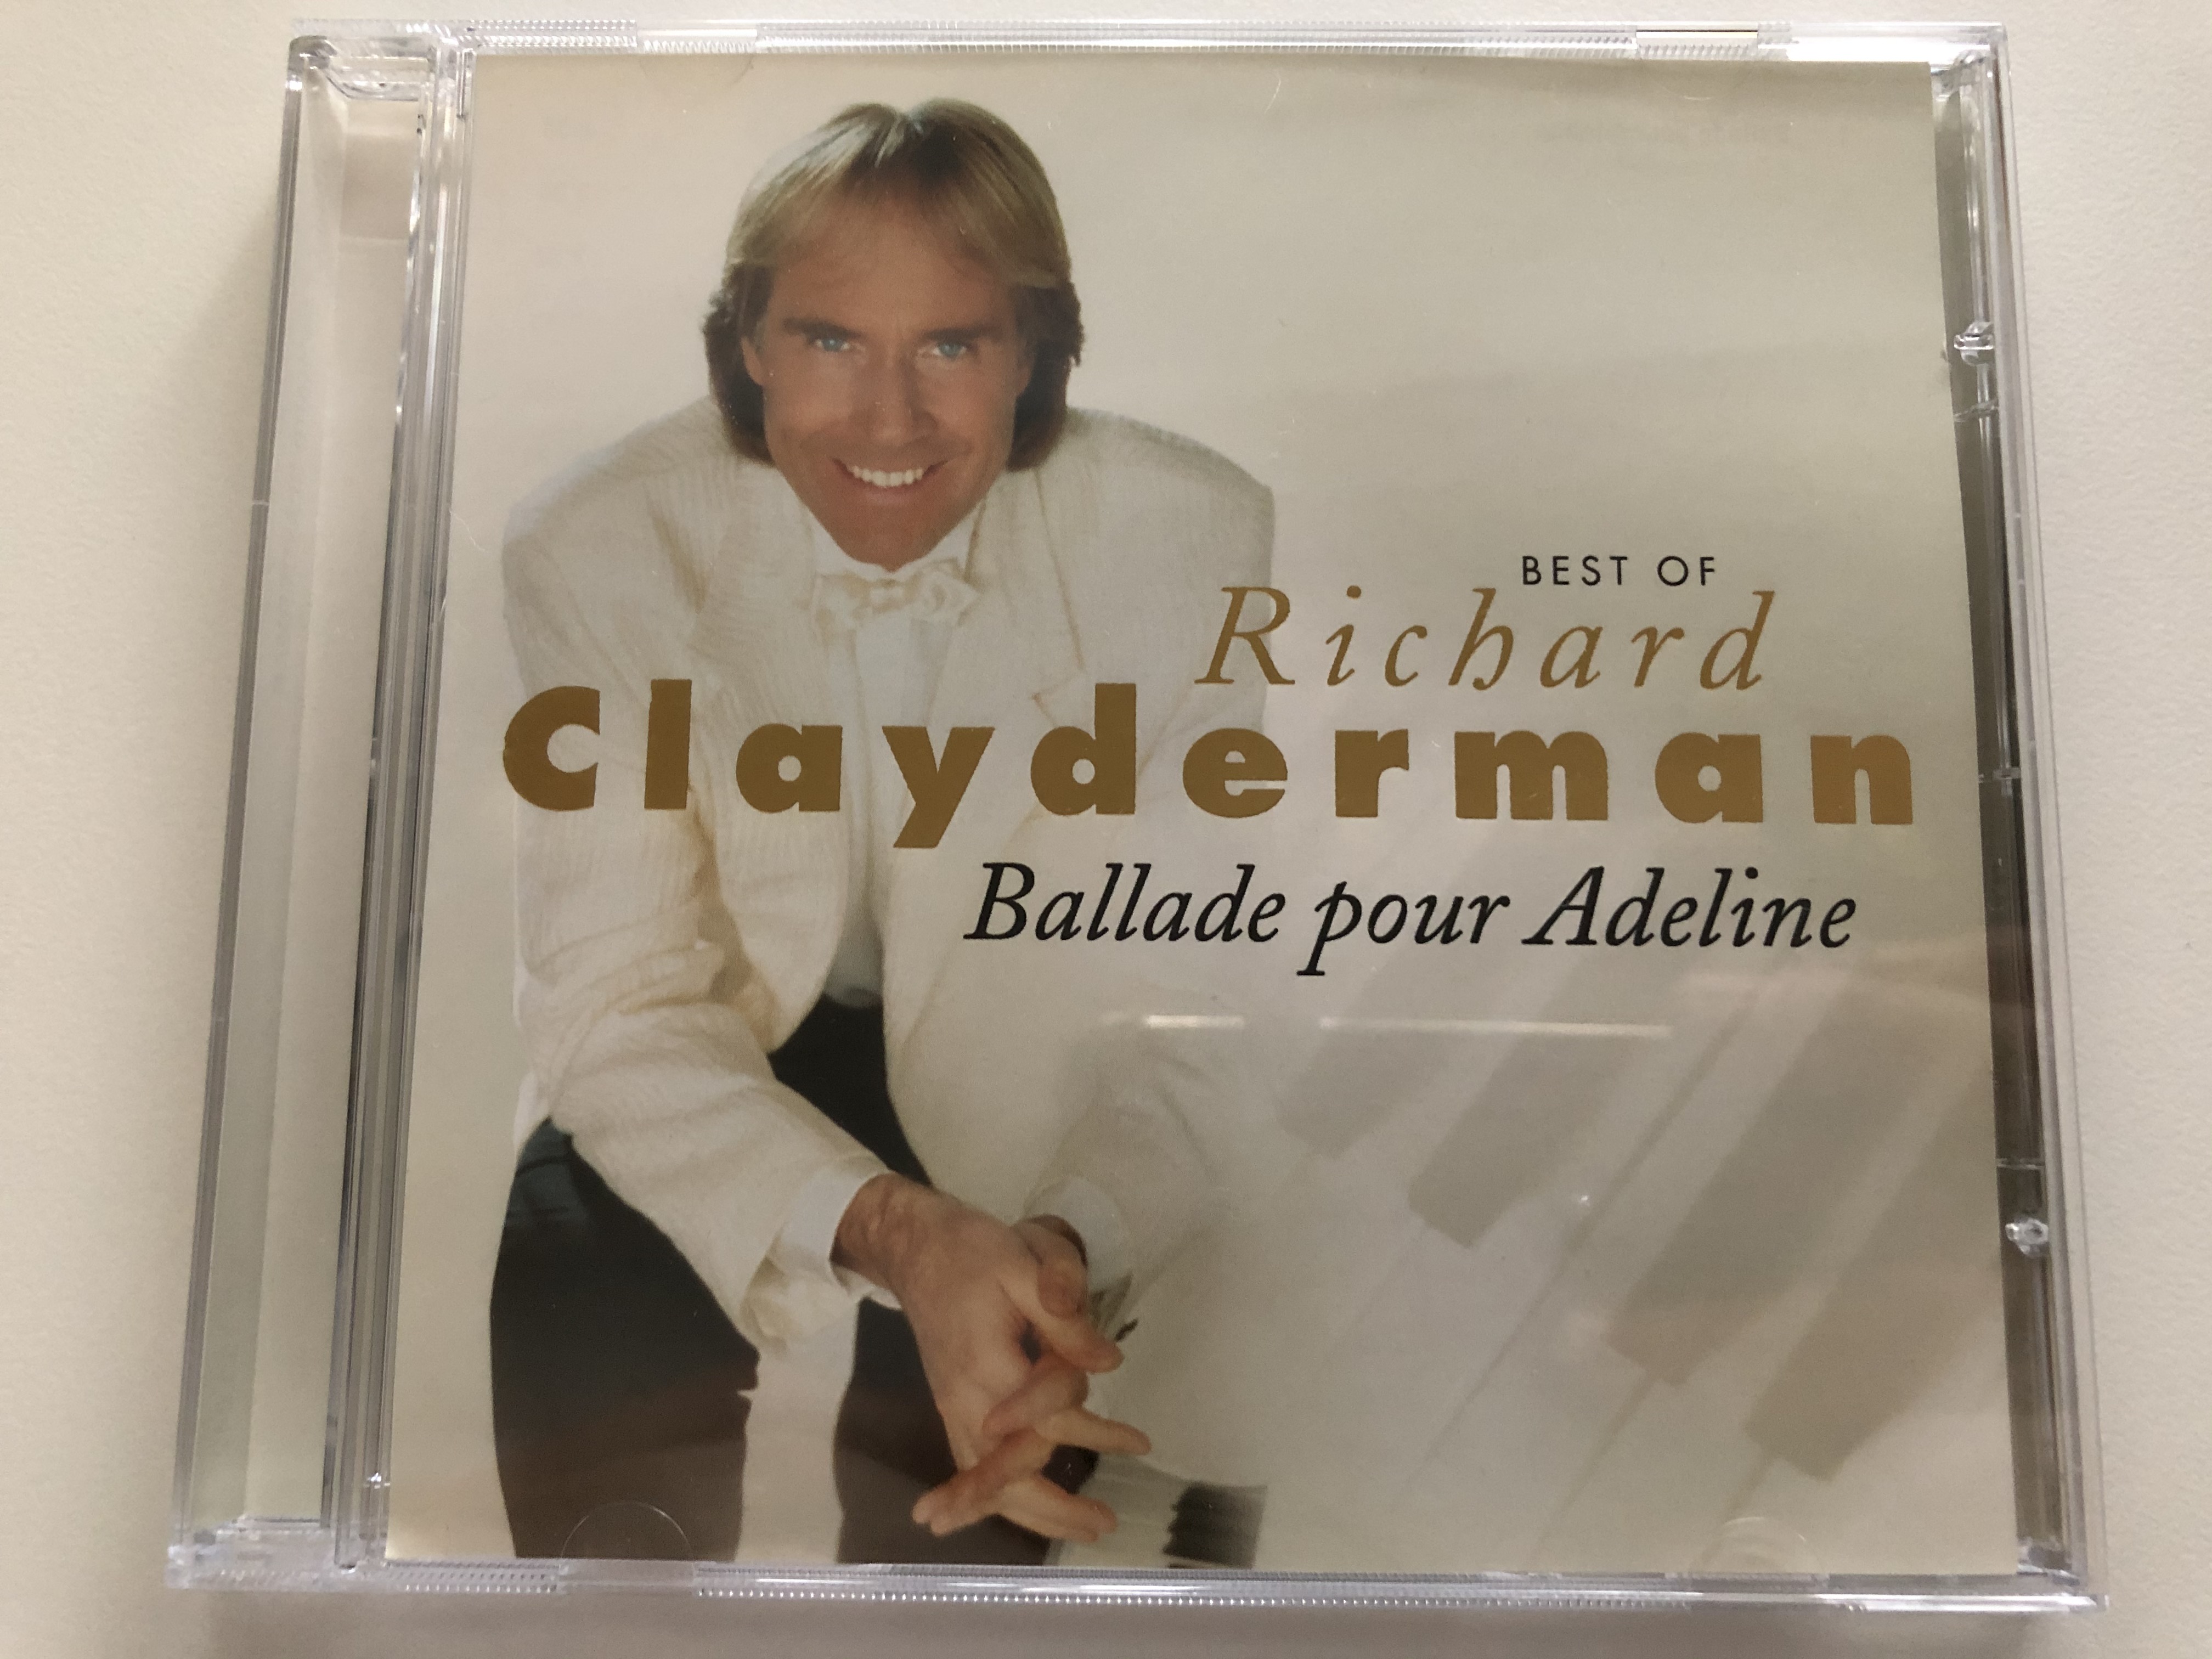 best-of-richard-clayderman-ballade-pour-adeline-eurotrend-audio-cd-stereo-cd-153-1-.jpg